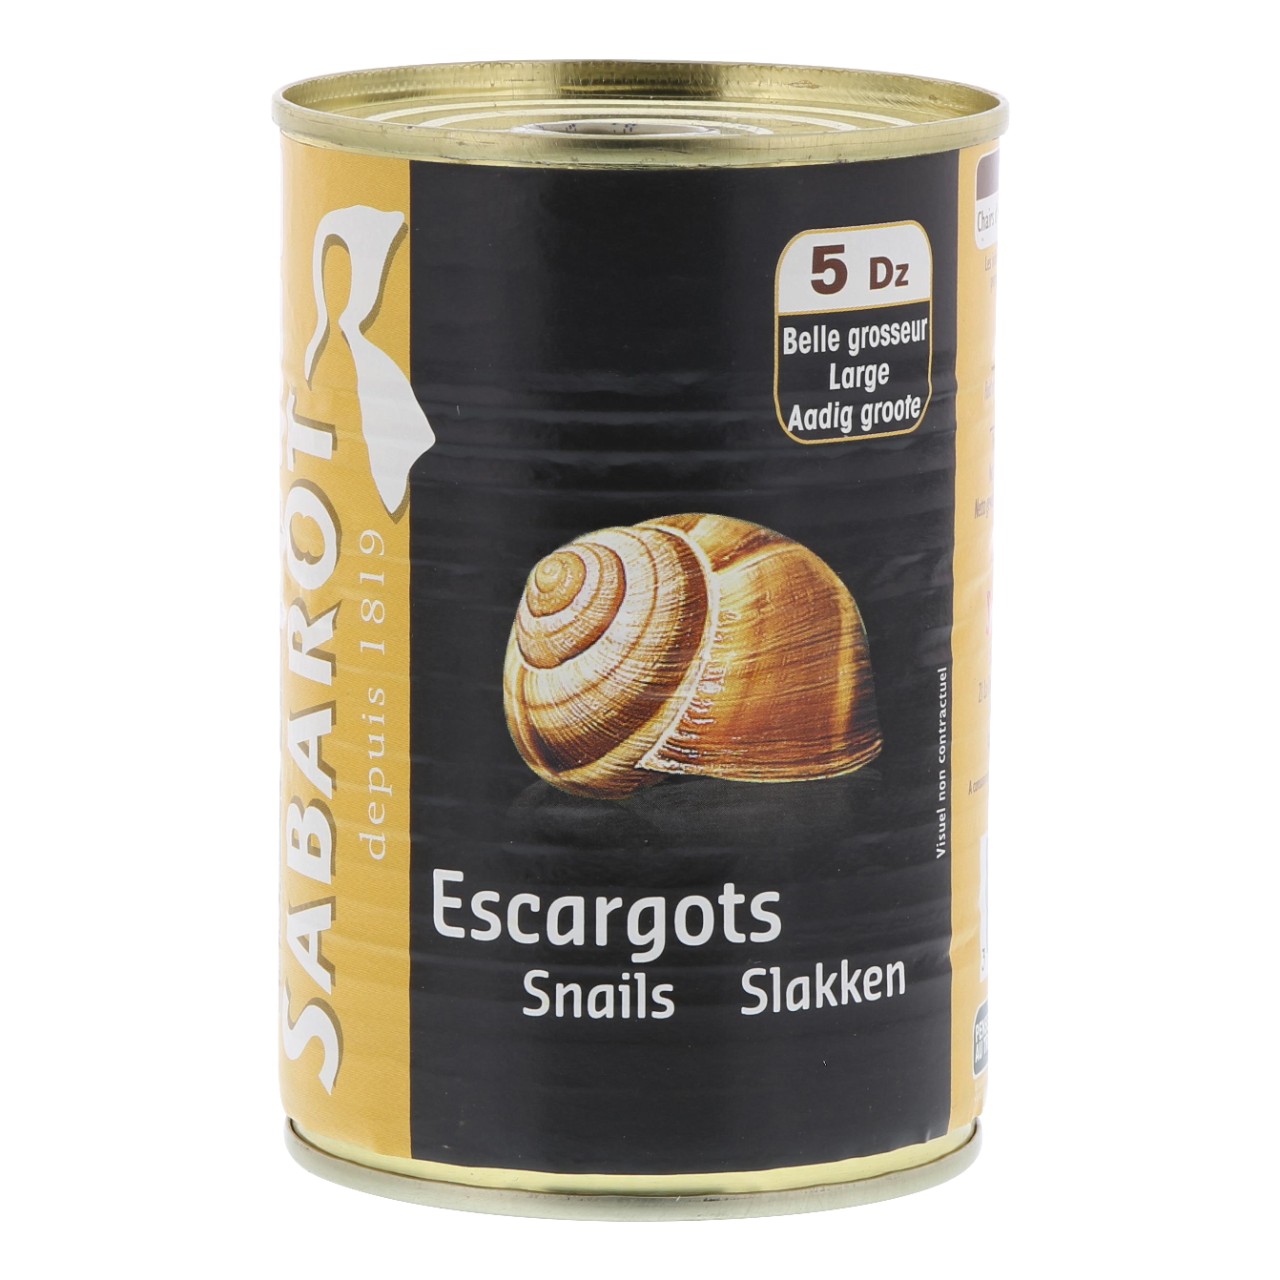 Escargots groot